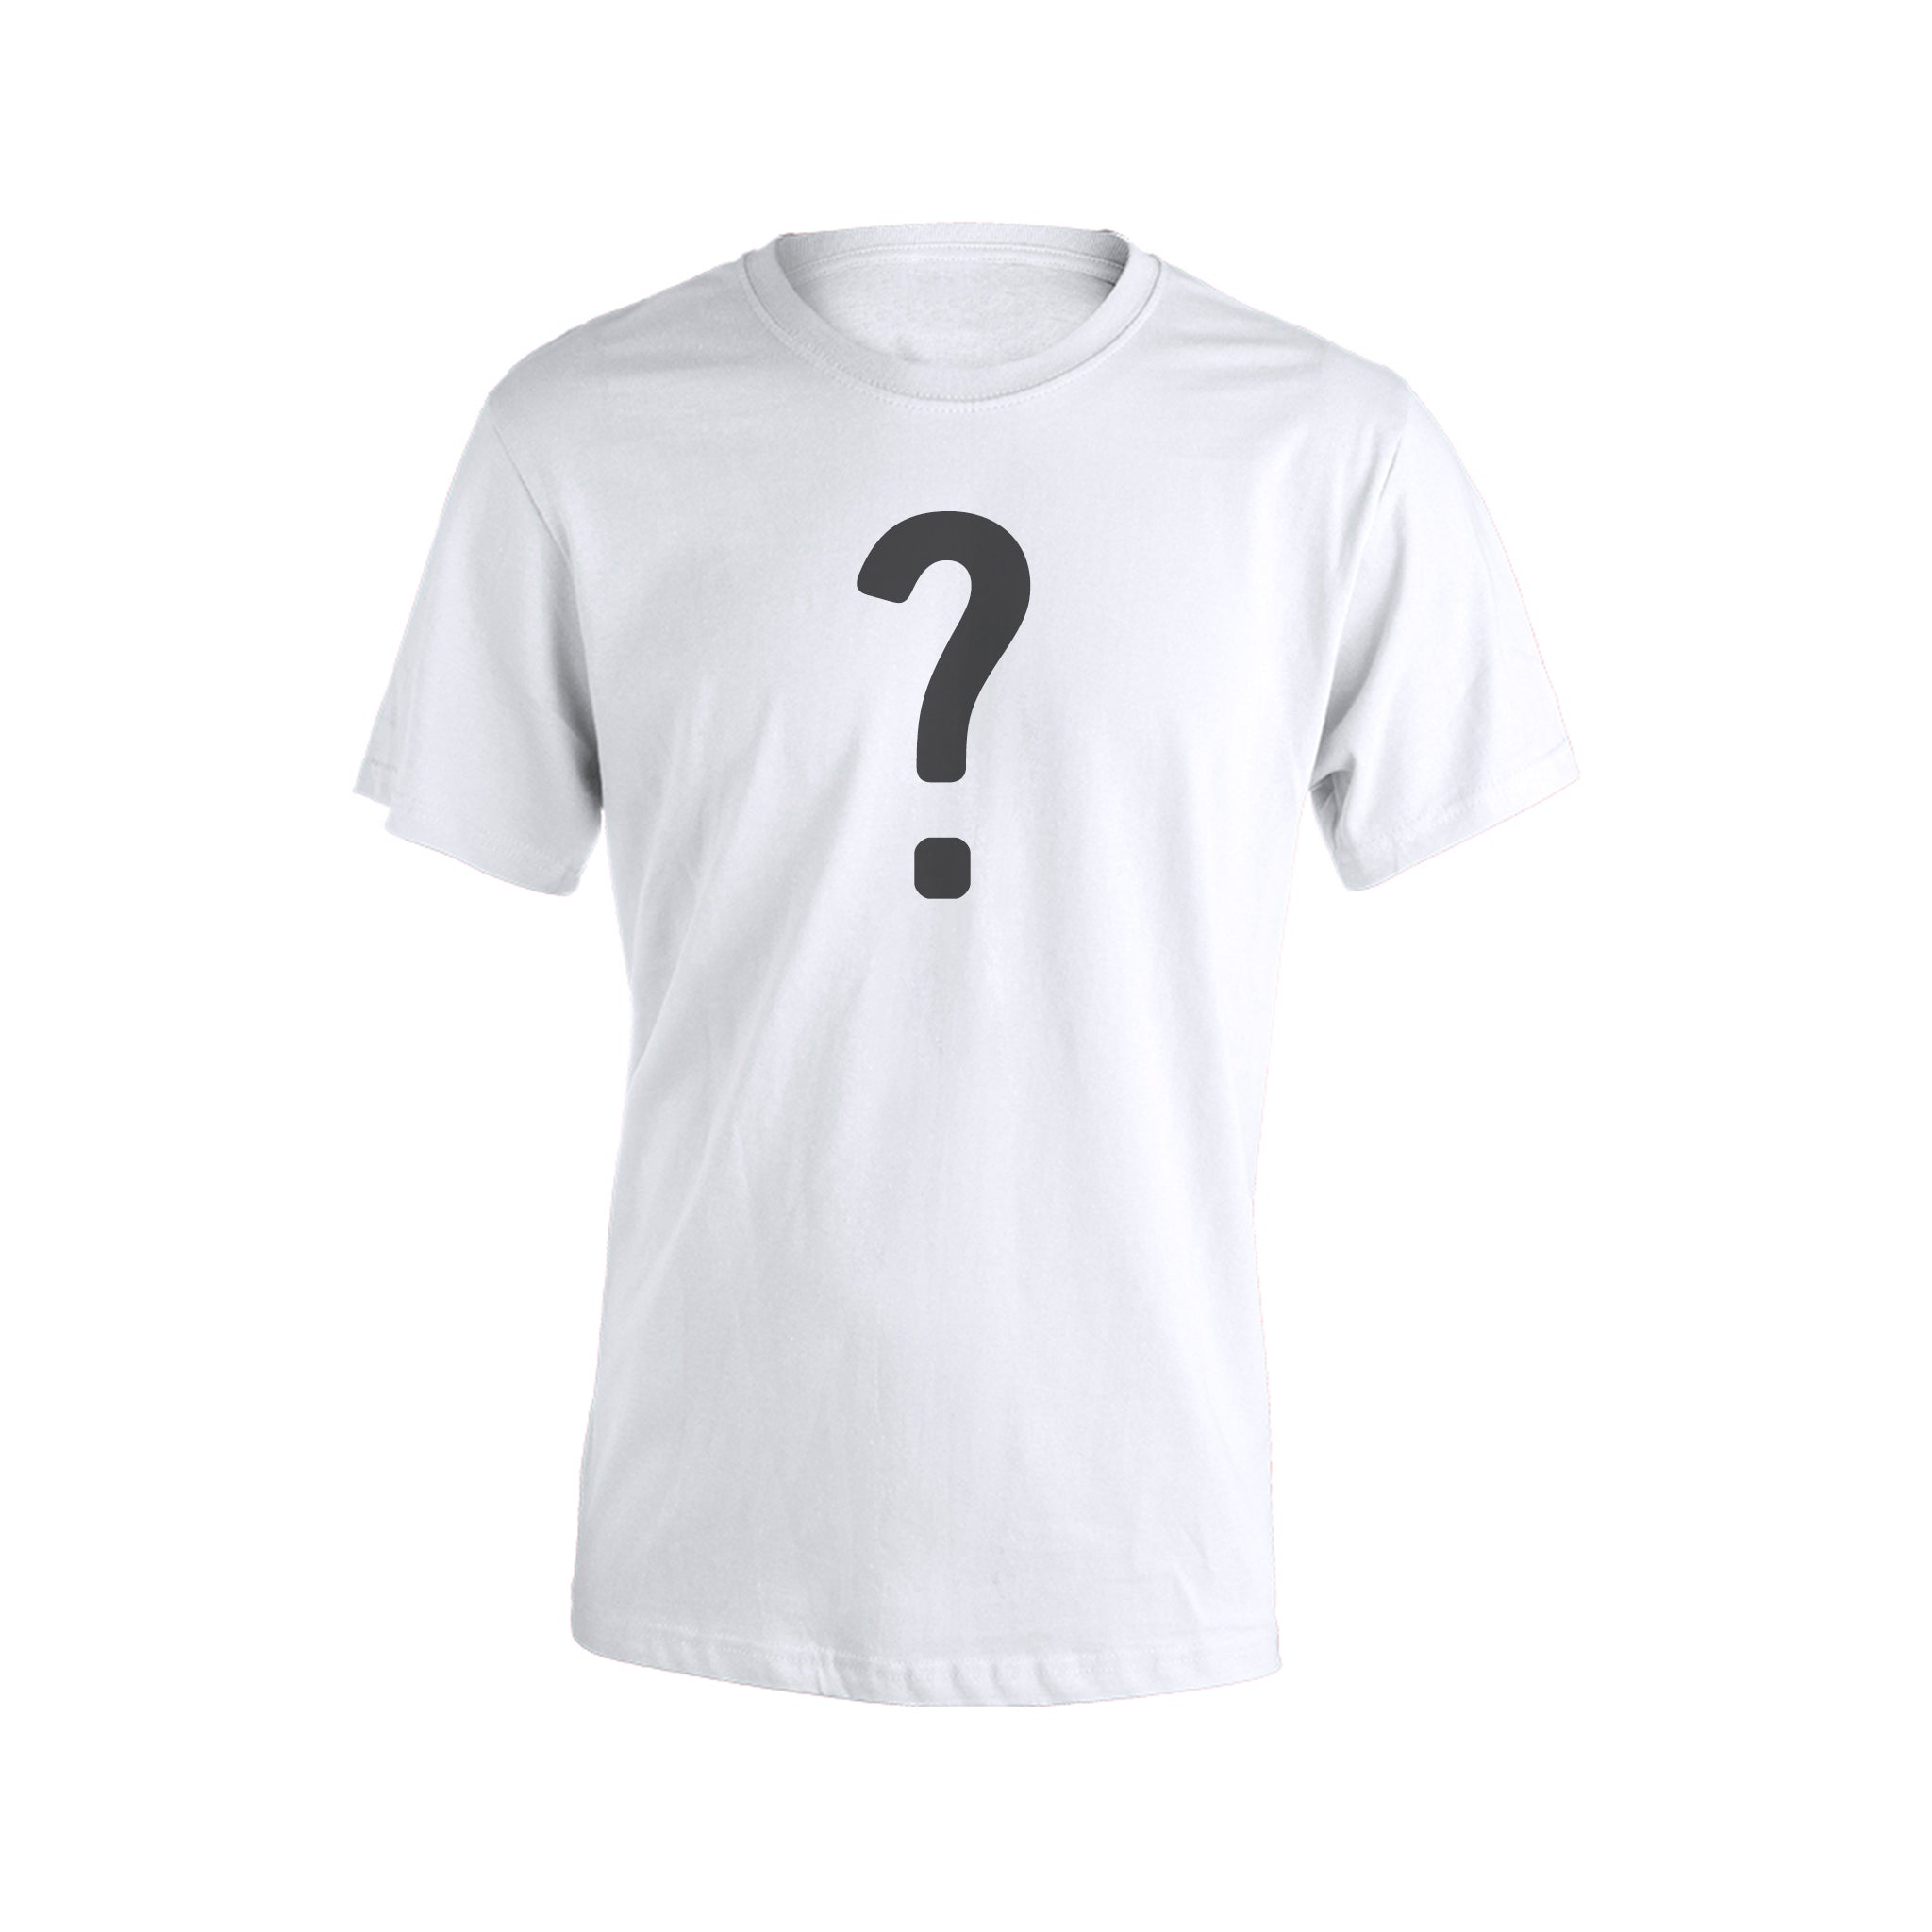 Carlin Brothers Mystery Shirt